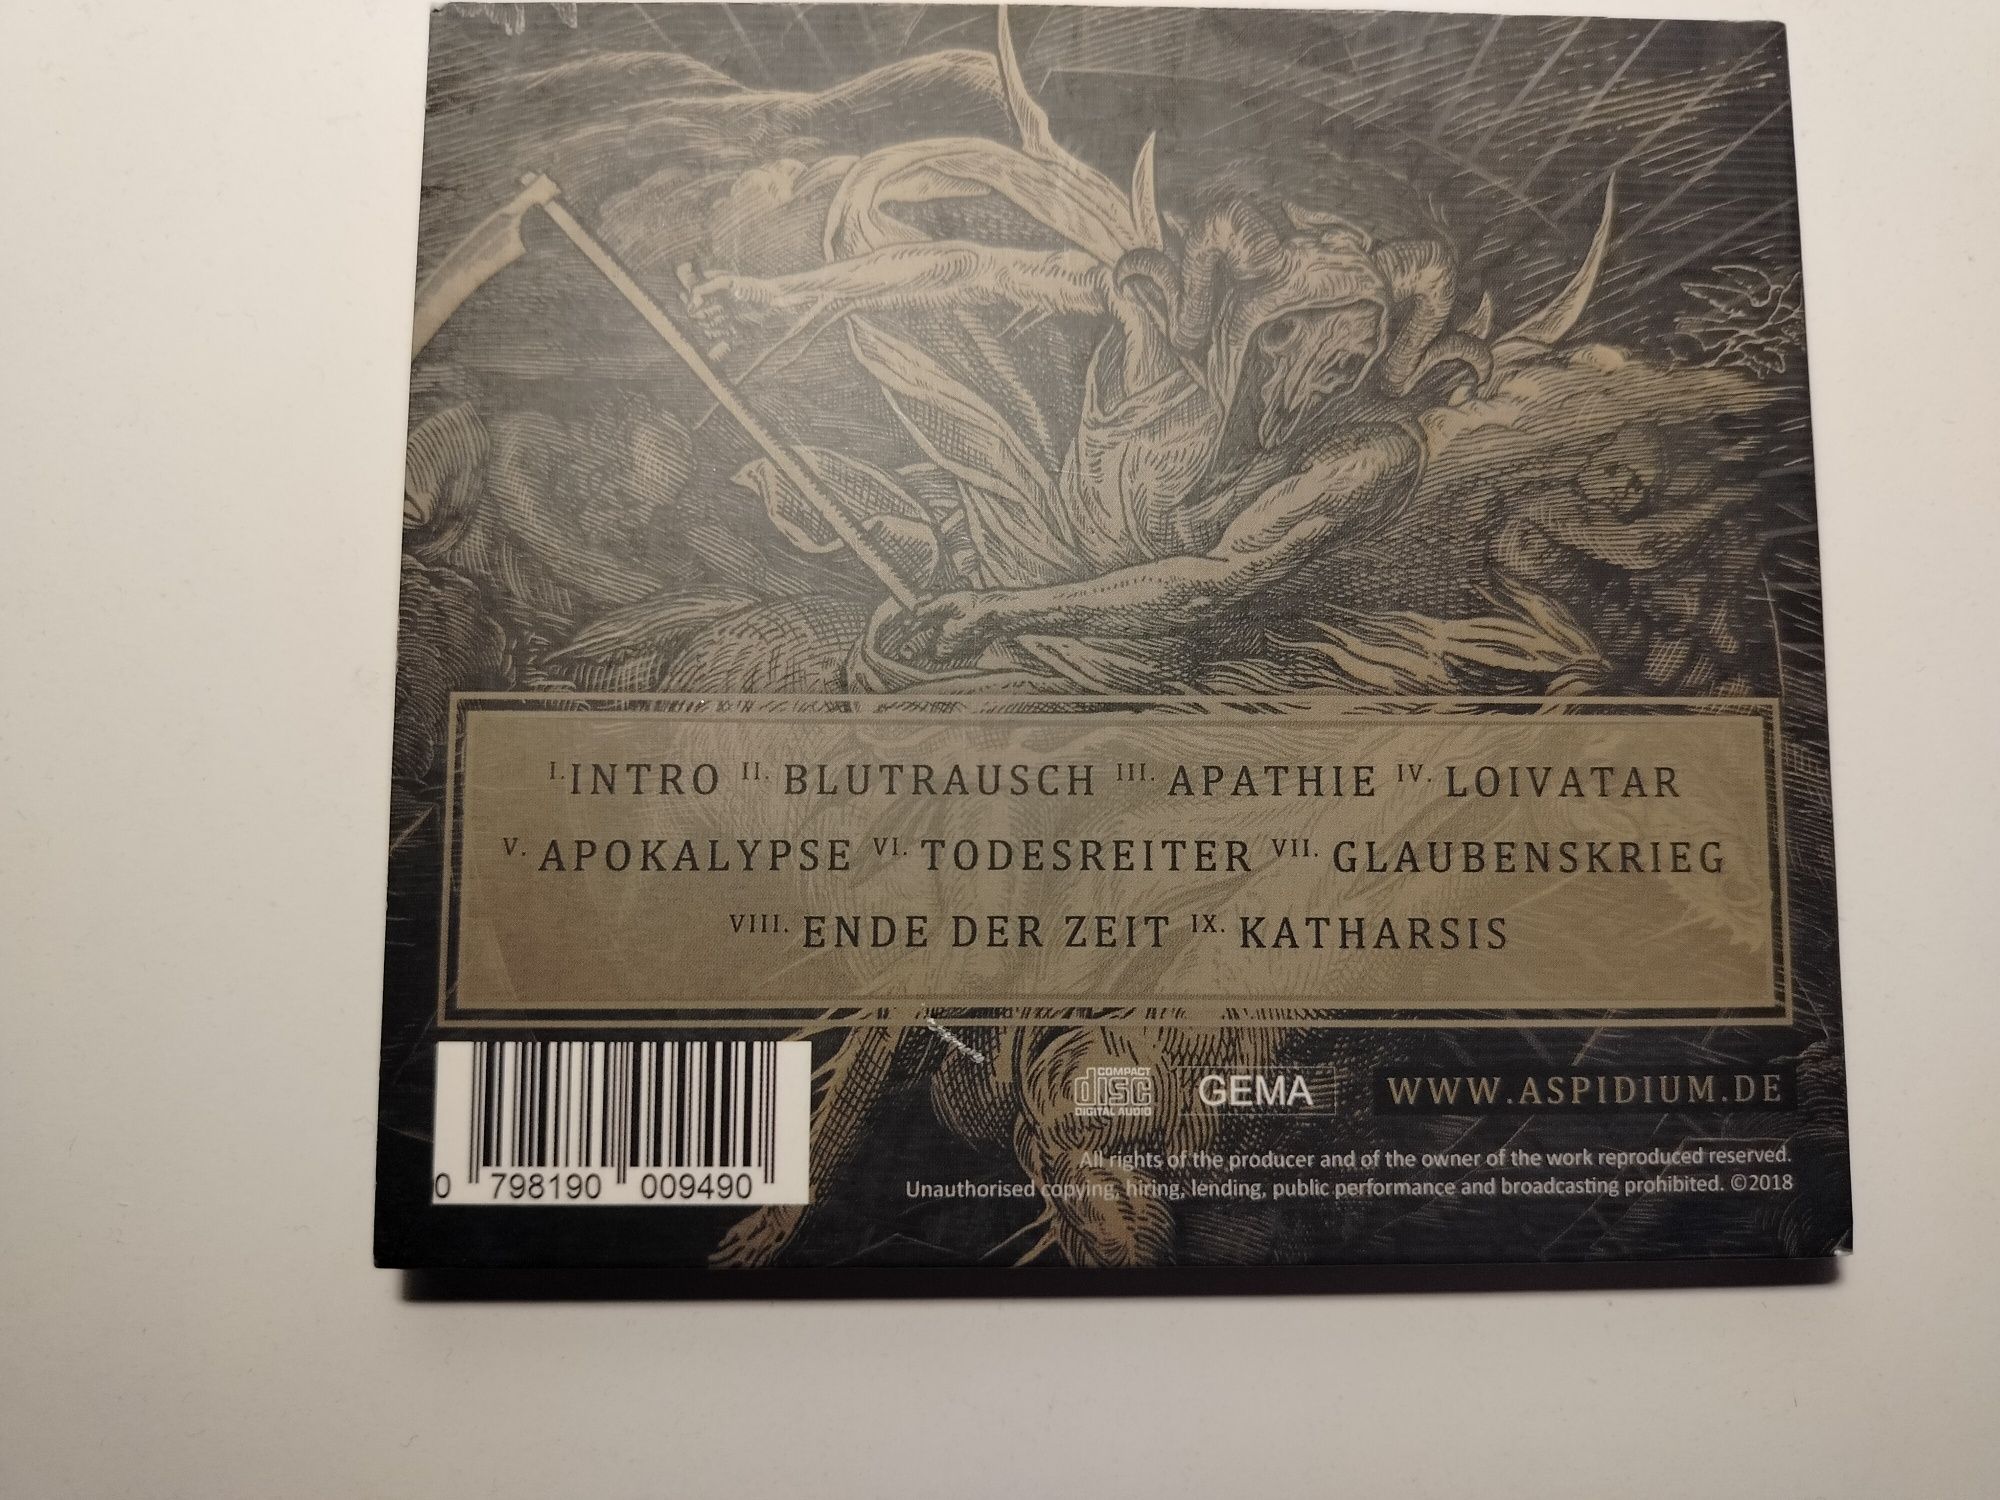 Płyta CD metalowa Aspidium